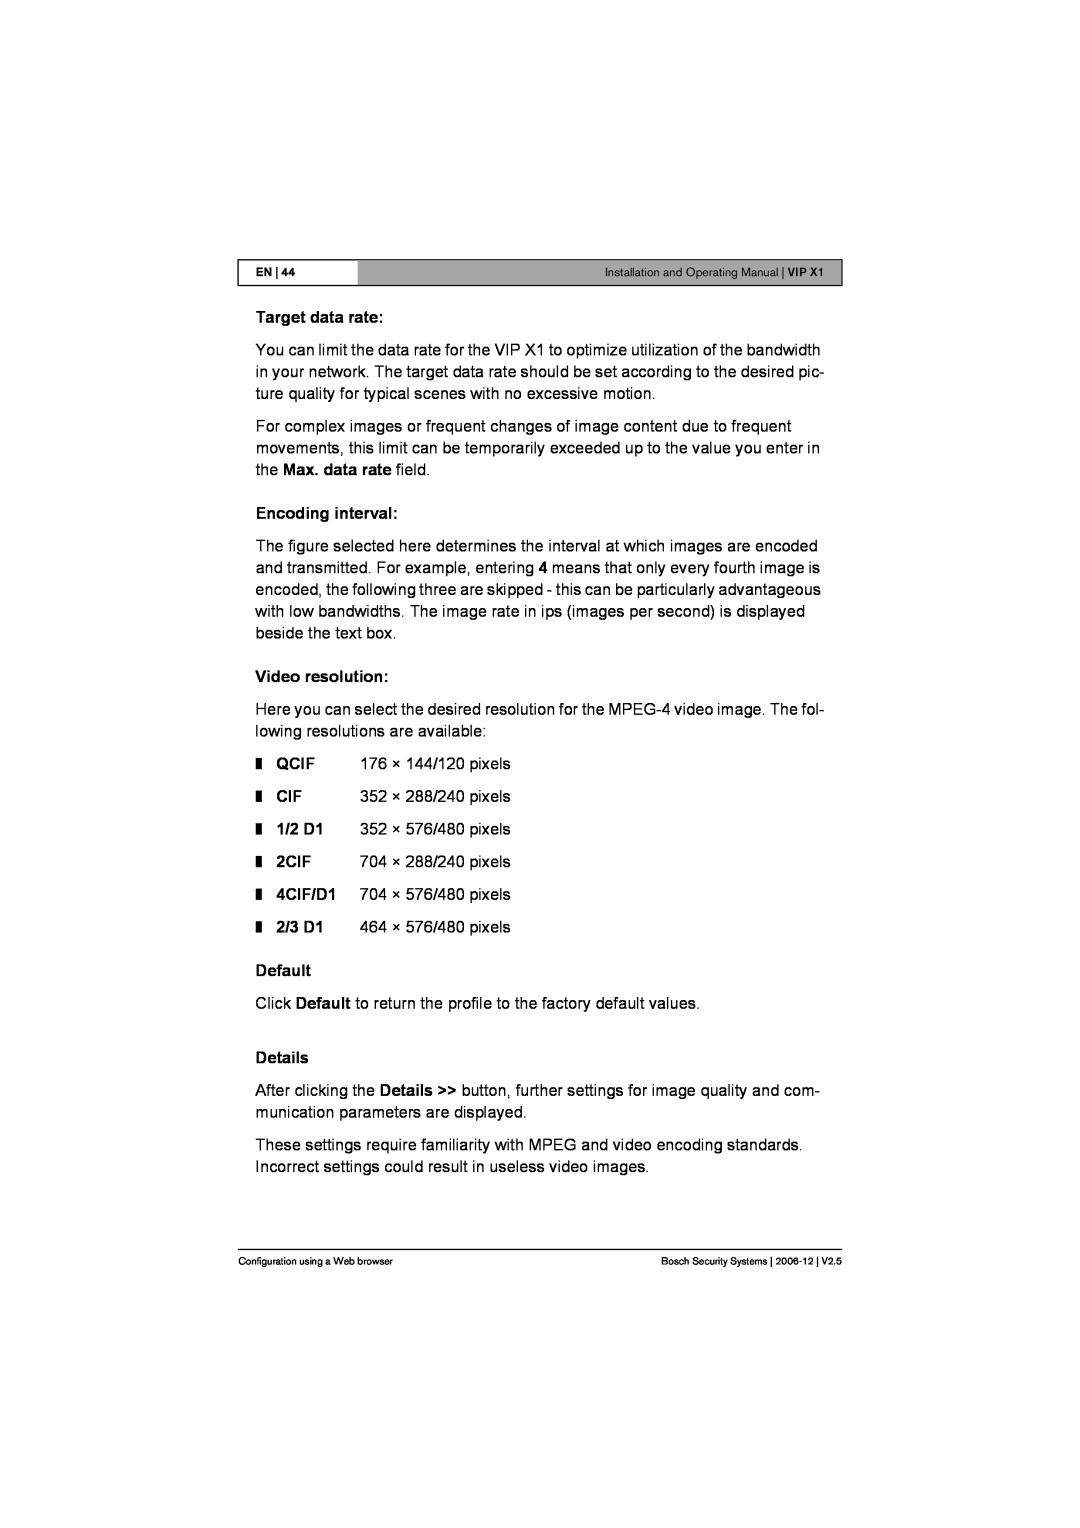 Bosch Appliances VIP X1 manual Target data rate, Encoding interval, Video resolution, Default, Details 